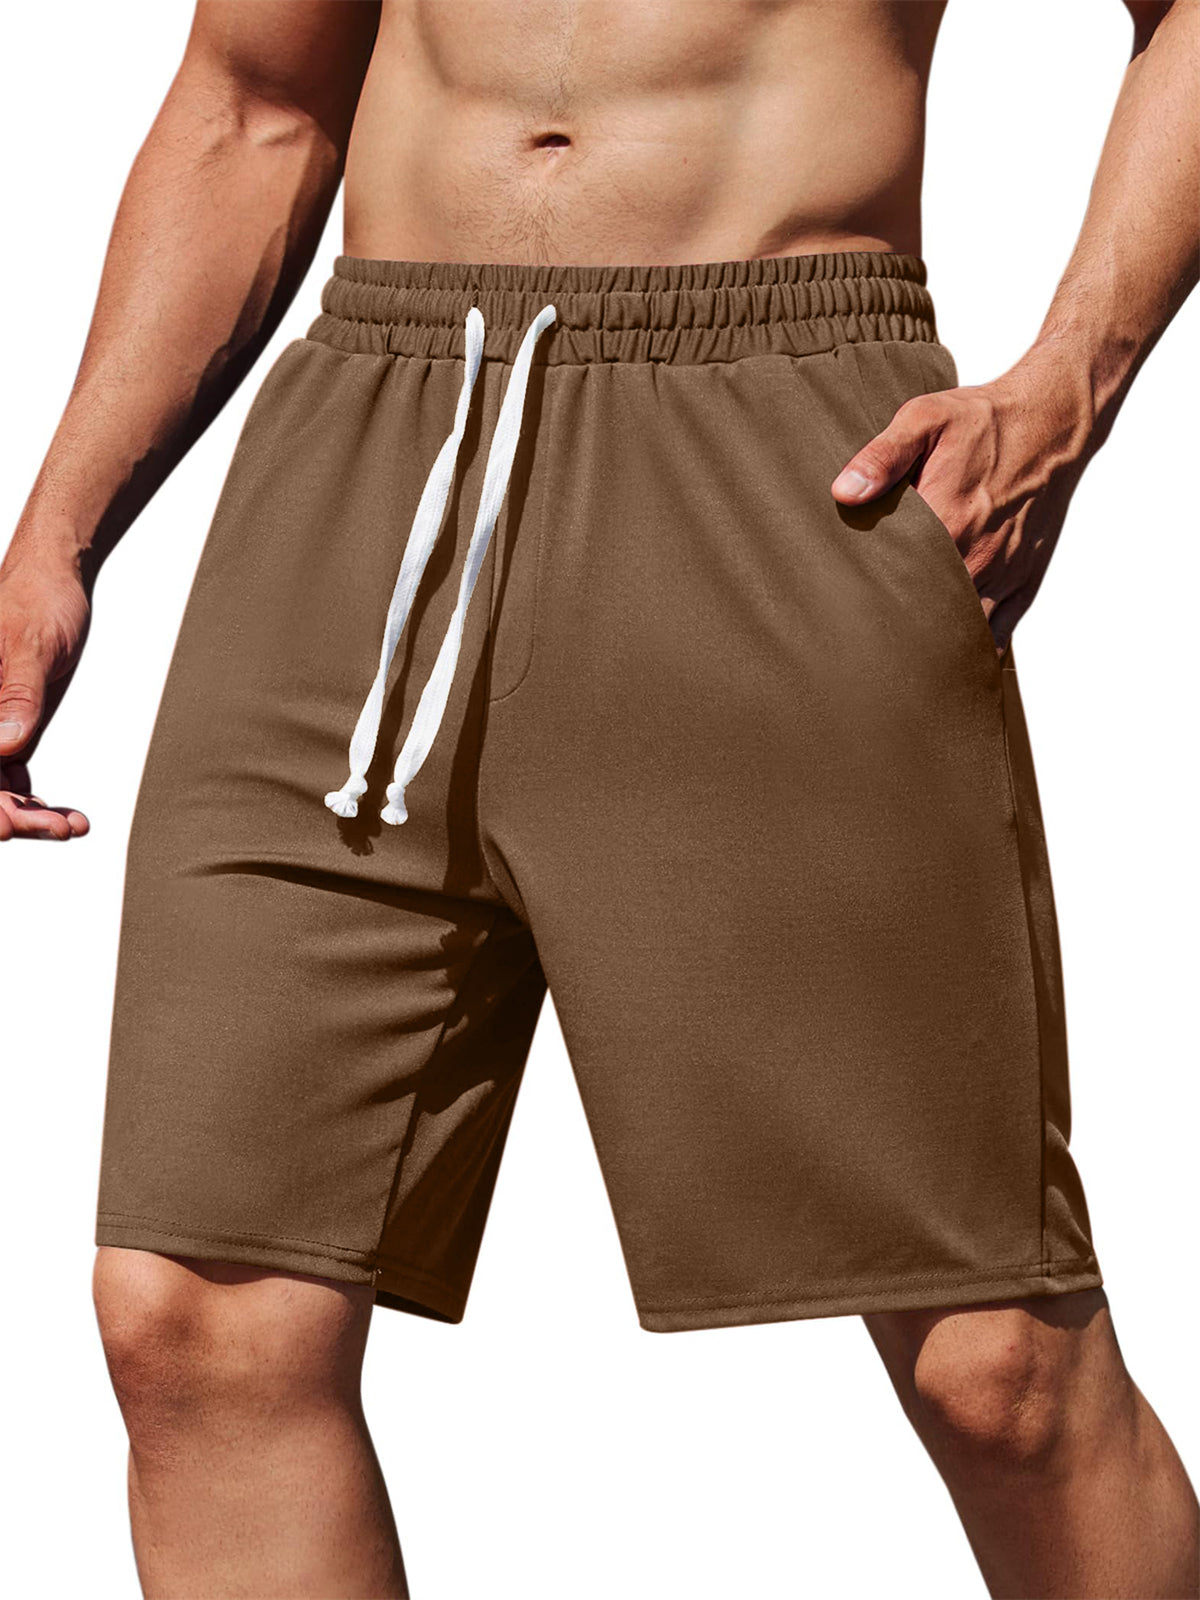 Men's Cotton Pocket Knit Elastic Casual Daily Shorts